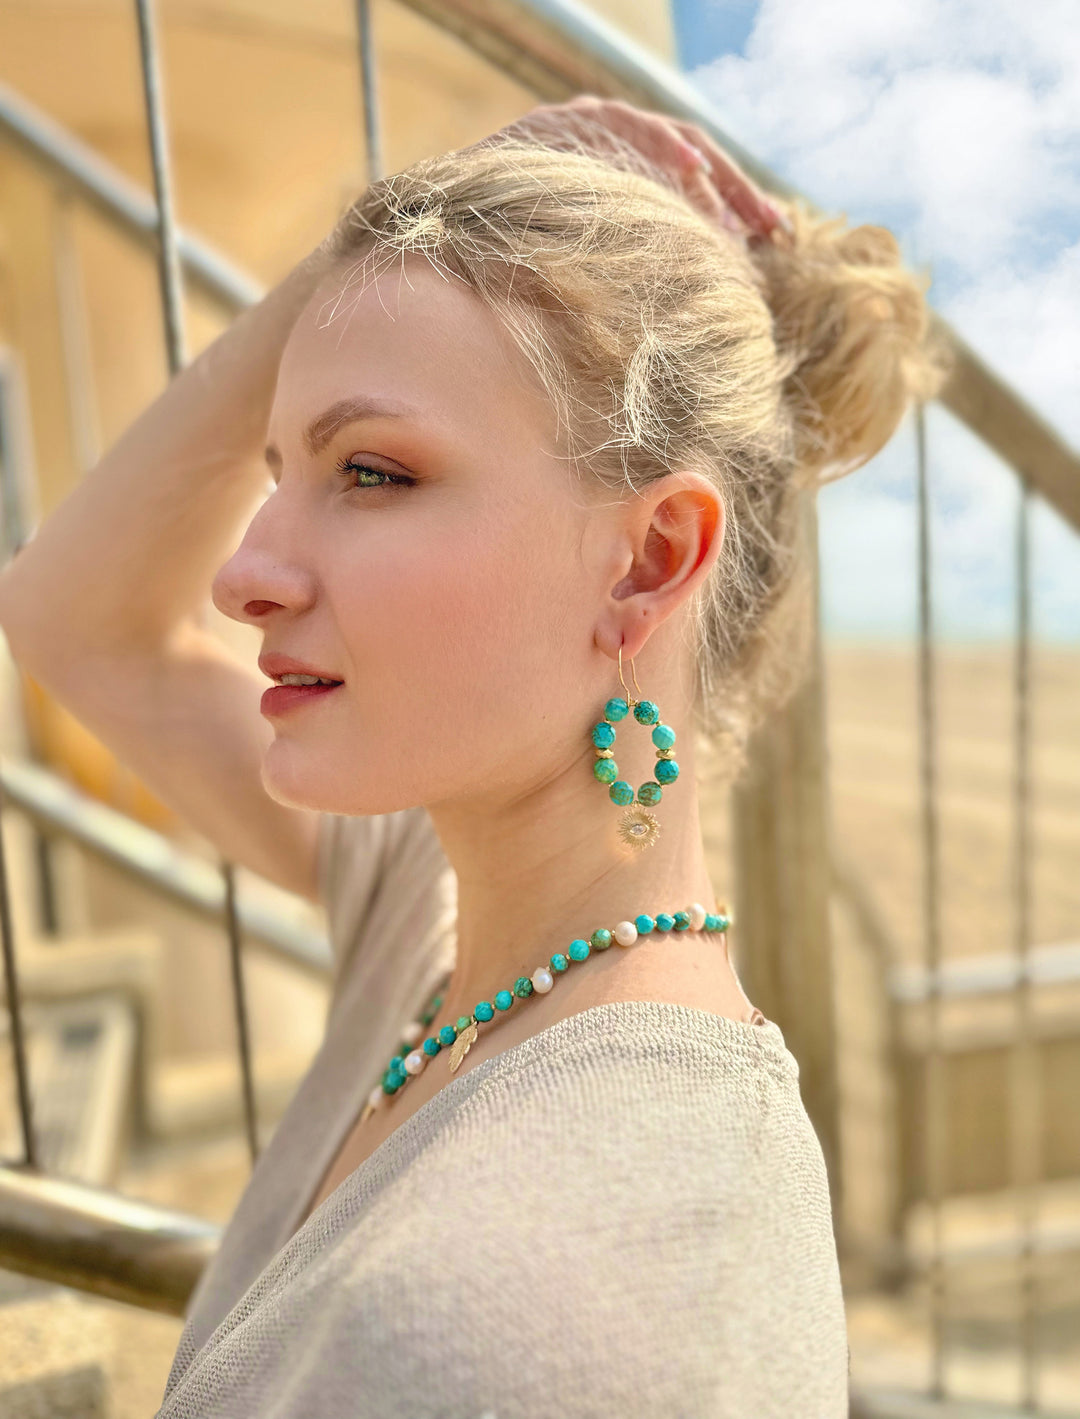 Turquoise with Evil EYE Earrings JE044 - FARRA